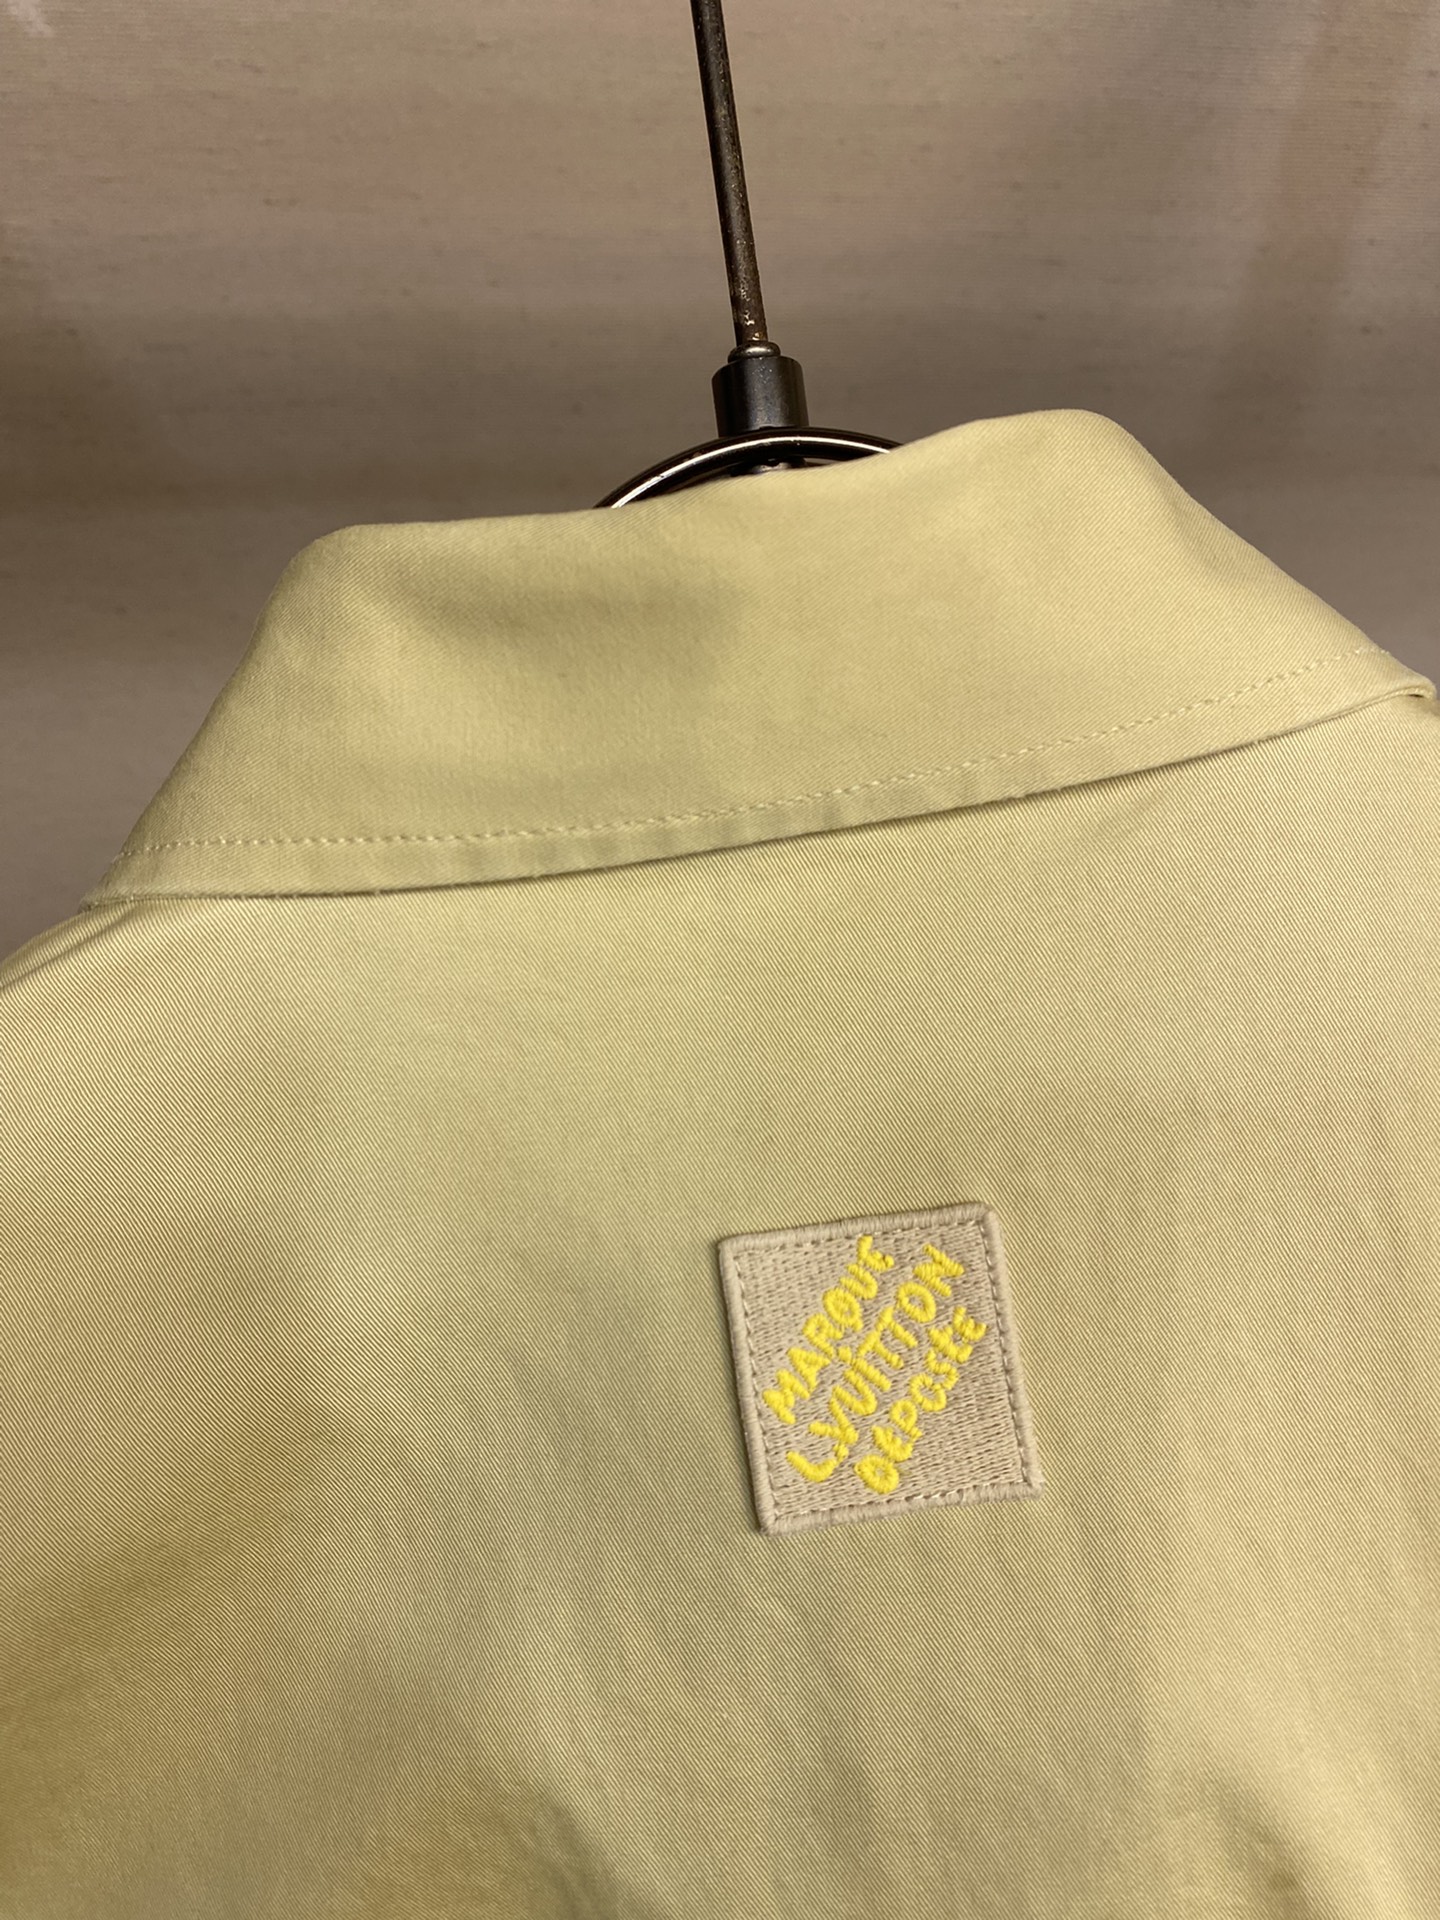 VLVUniform是一种展现LV男装精髓的衬衫它以极致的细节和精良的手工工艺诠释了LV的标志性元素和传